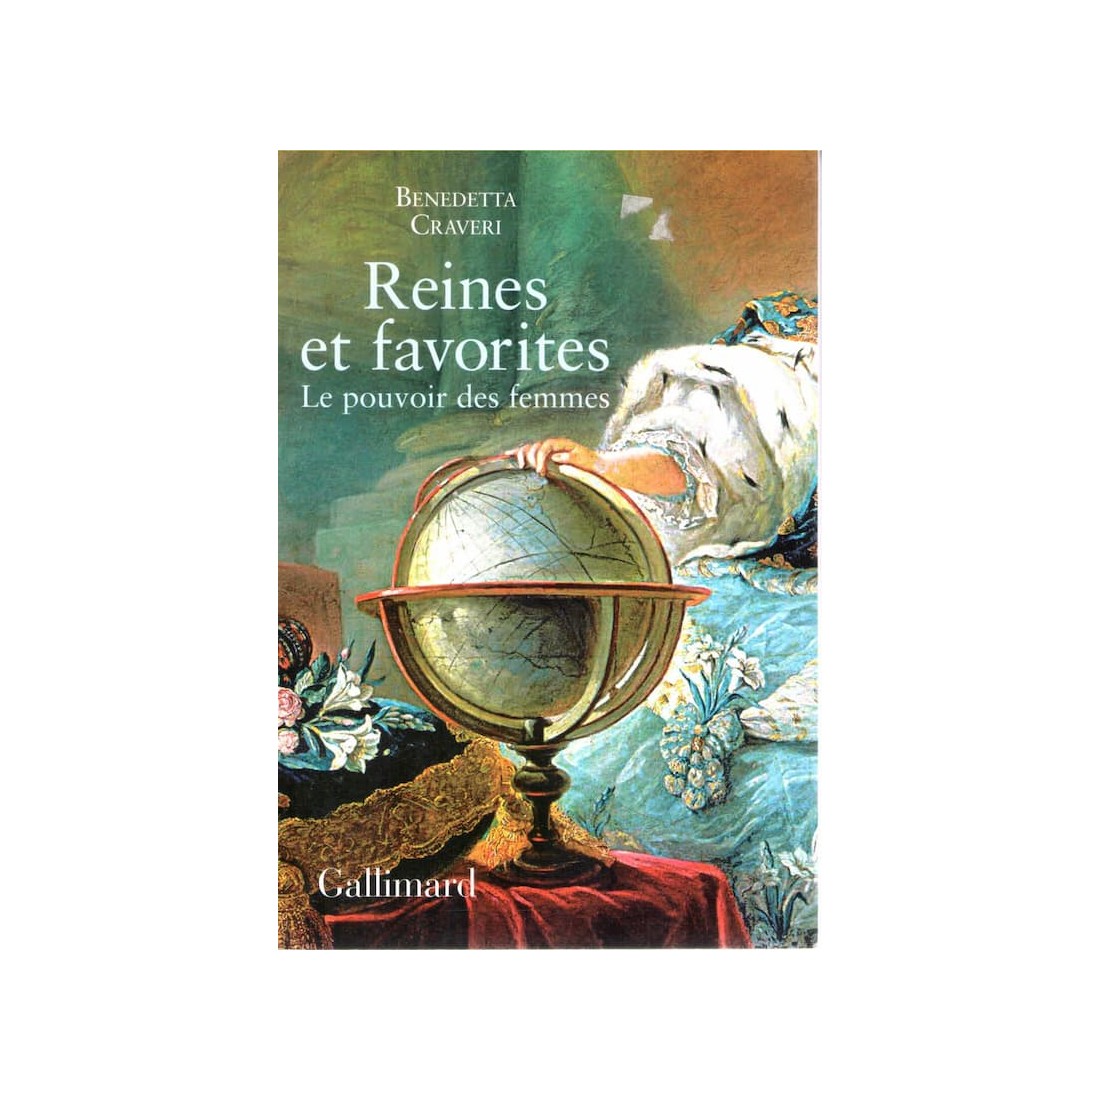 Reines et favorites - Roman de Benedetta Craveri - ocazlivres.com